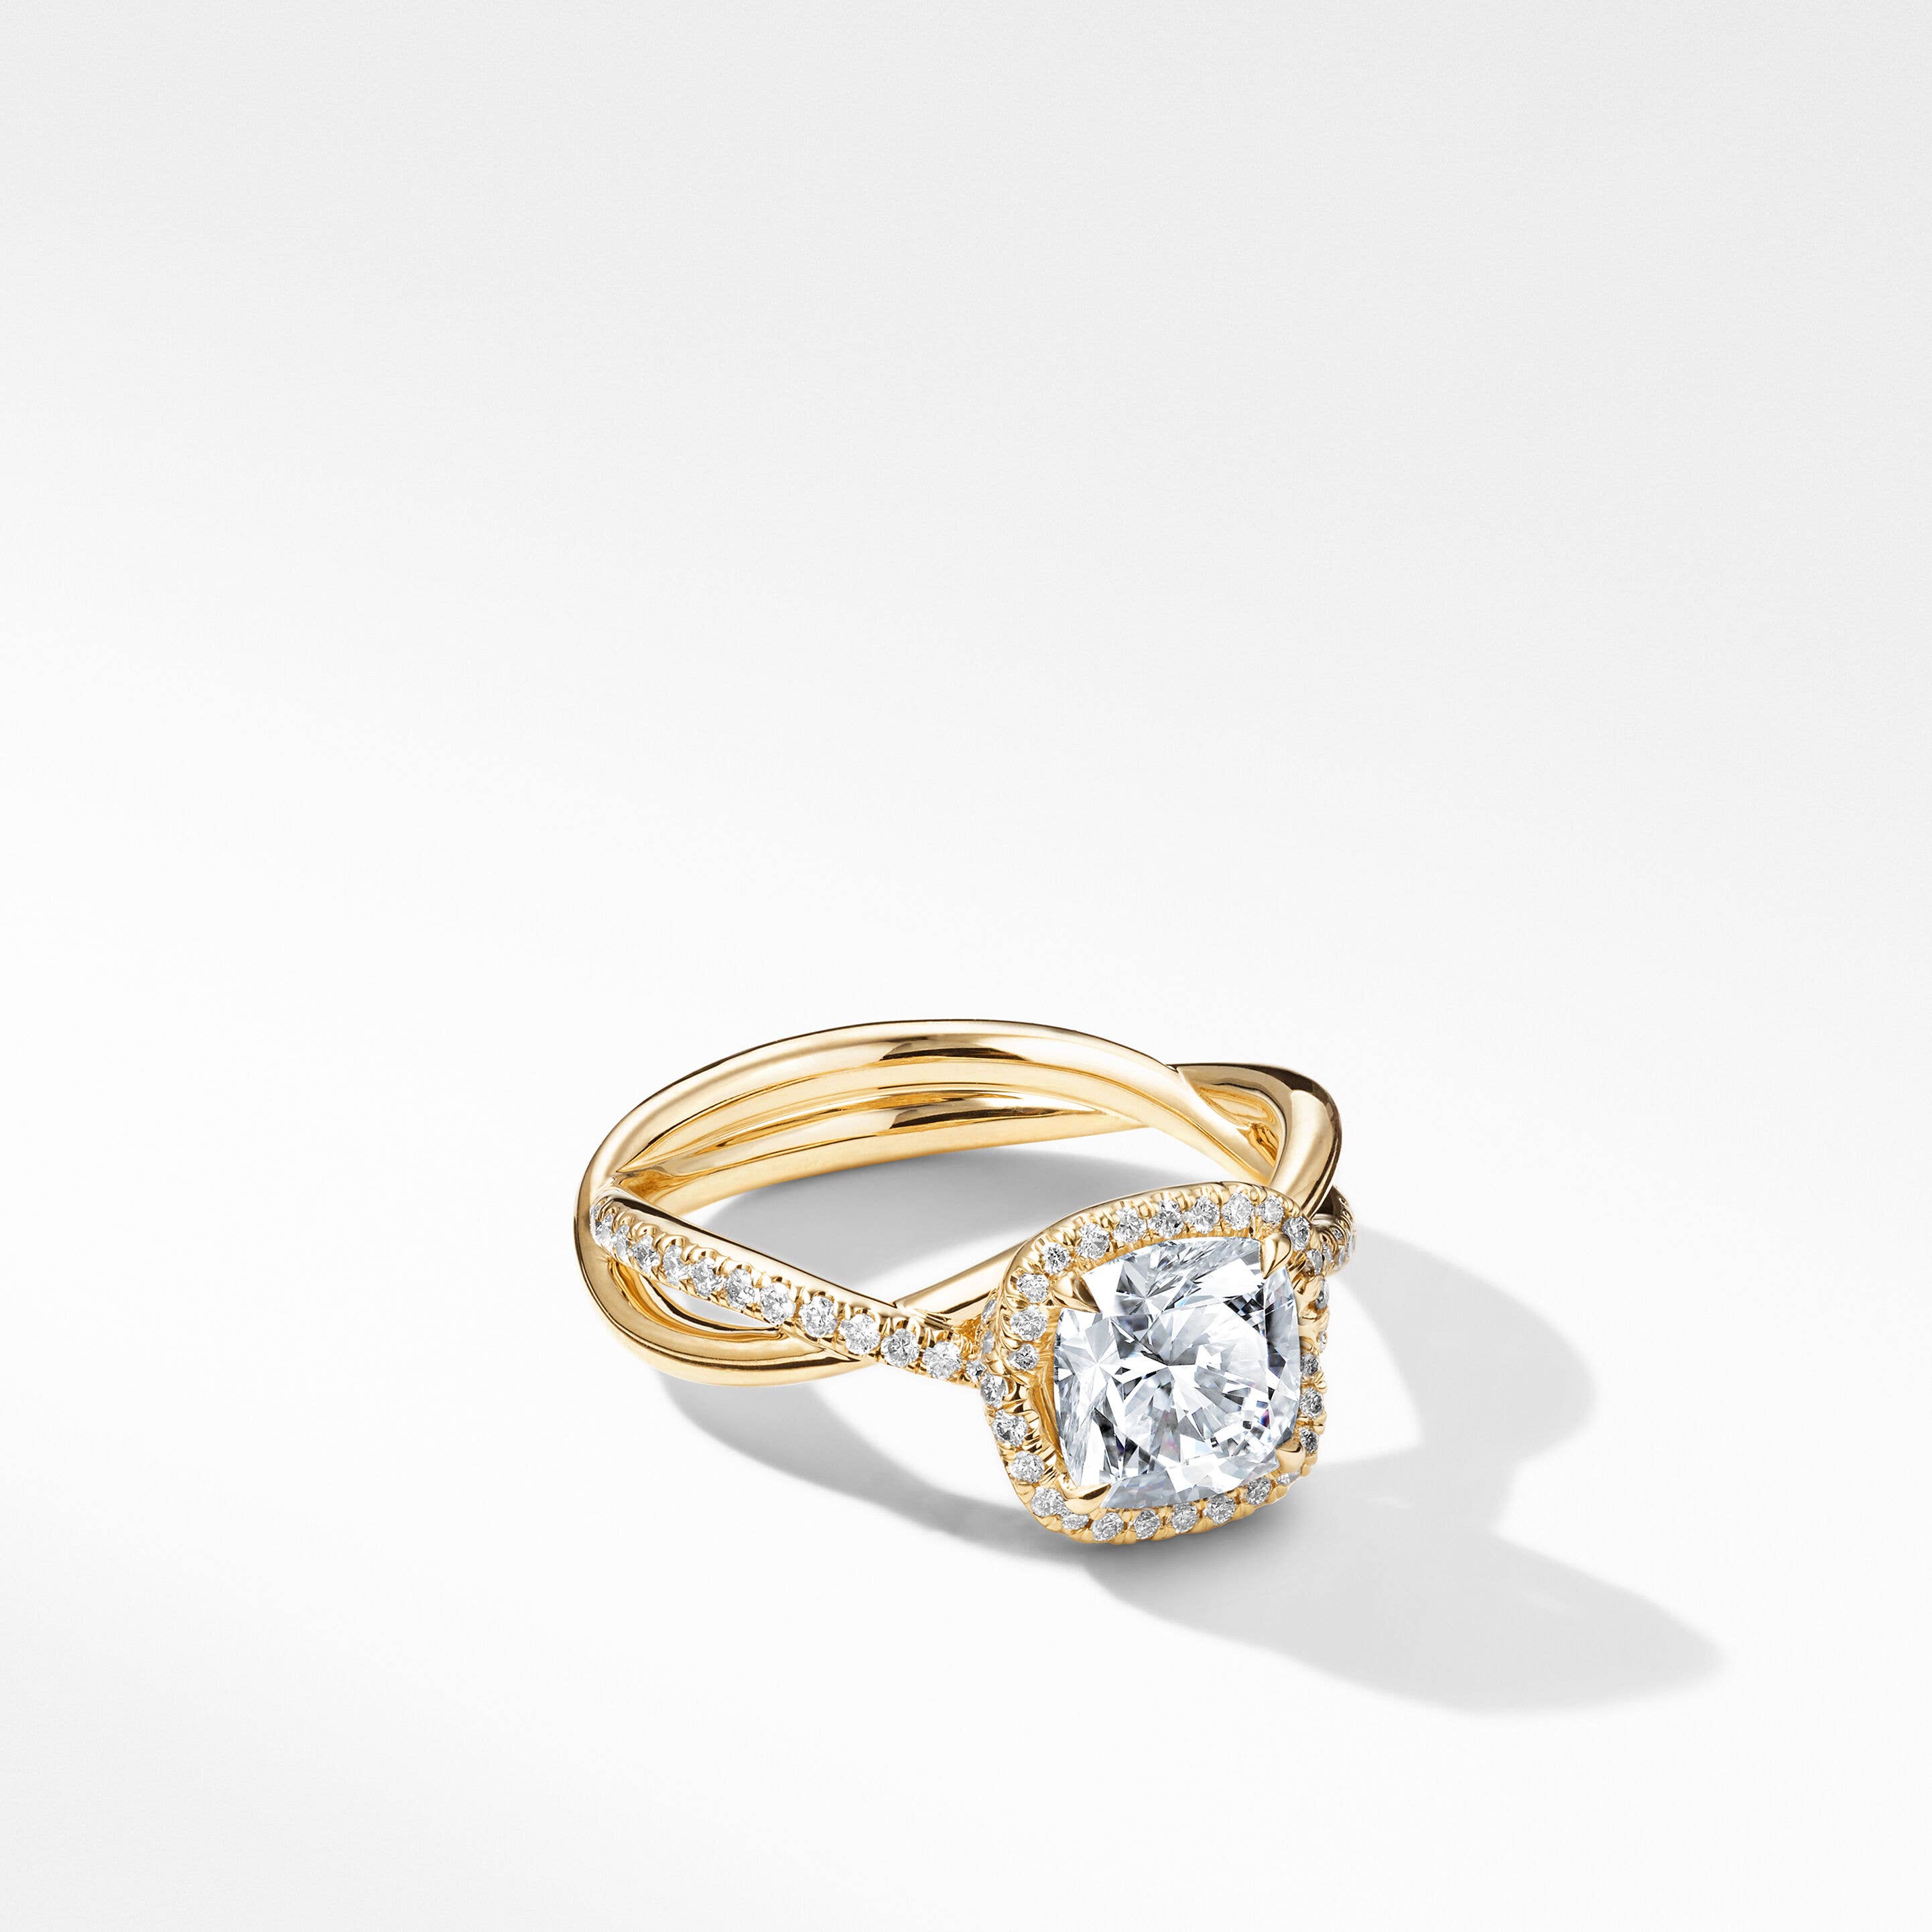 DY Lanai Engagement Ring in 18K Yellow Gold, Cushion